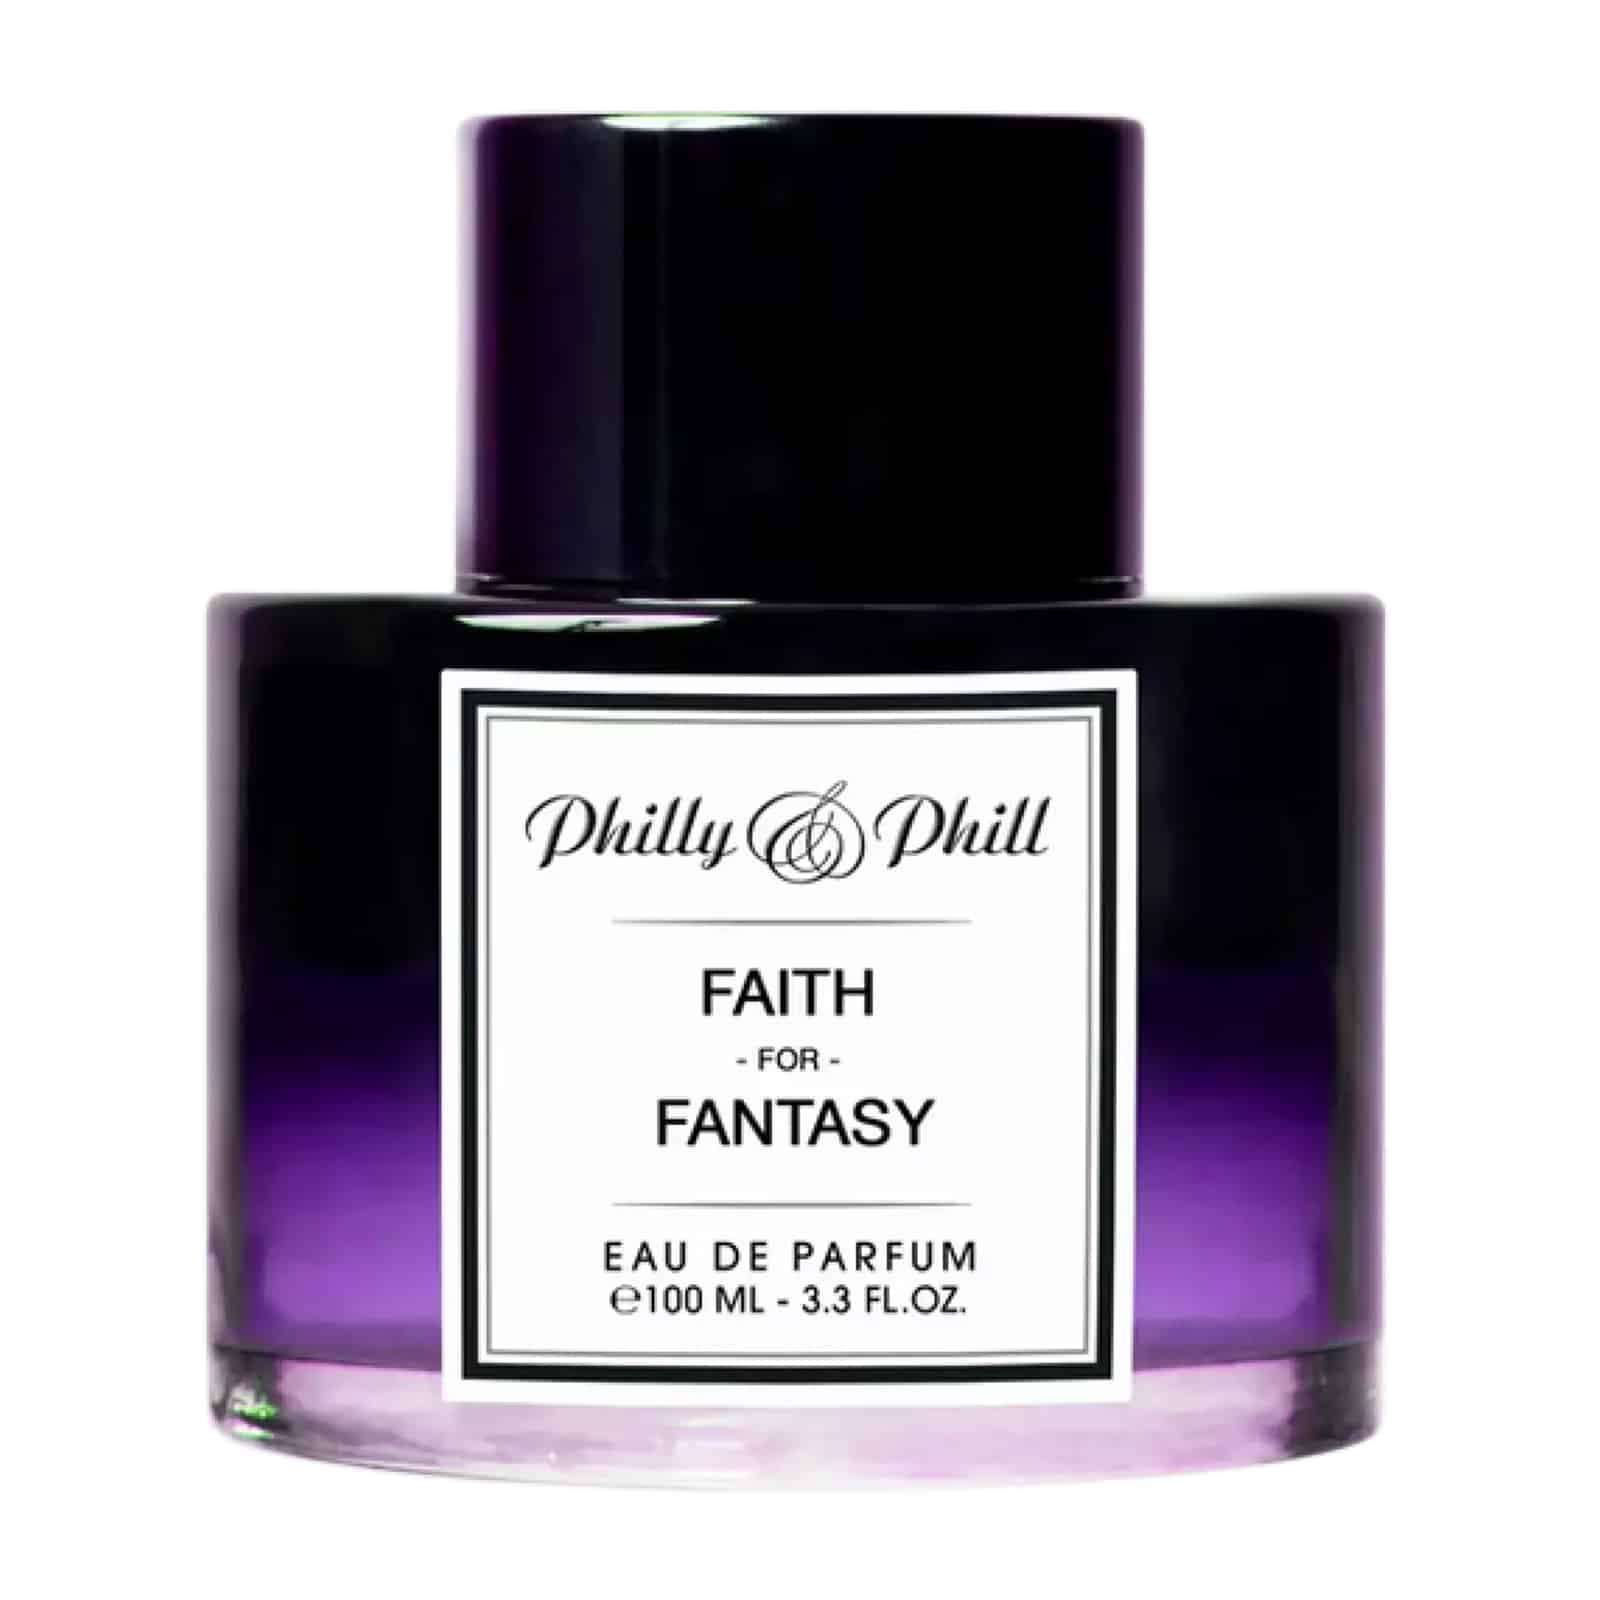 Fallachi beauty - 2022 - Philly & Phil - Faith for Fantasy